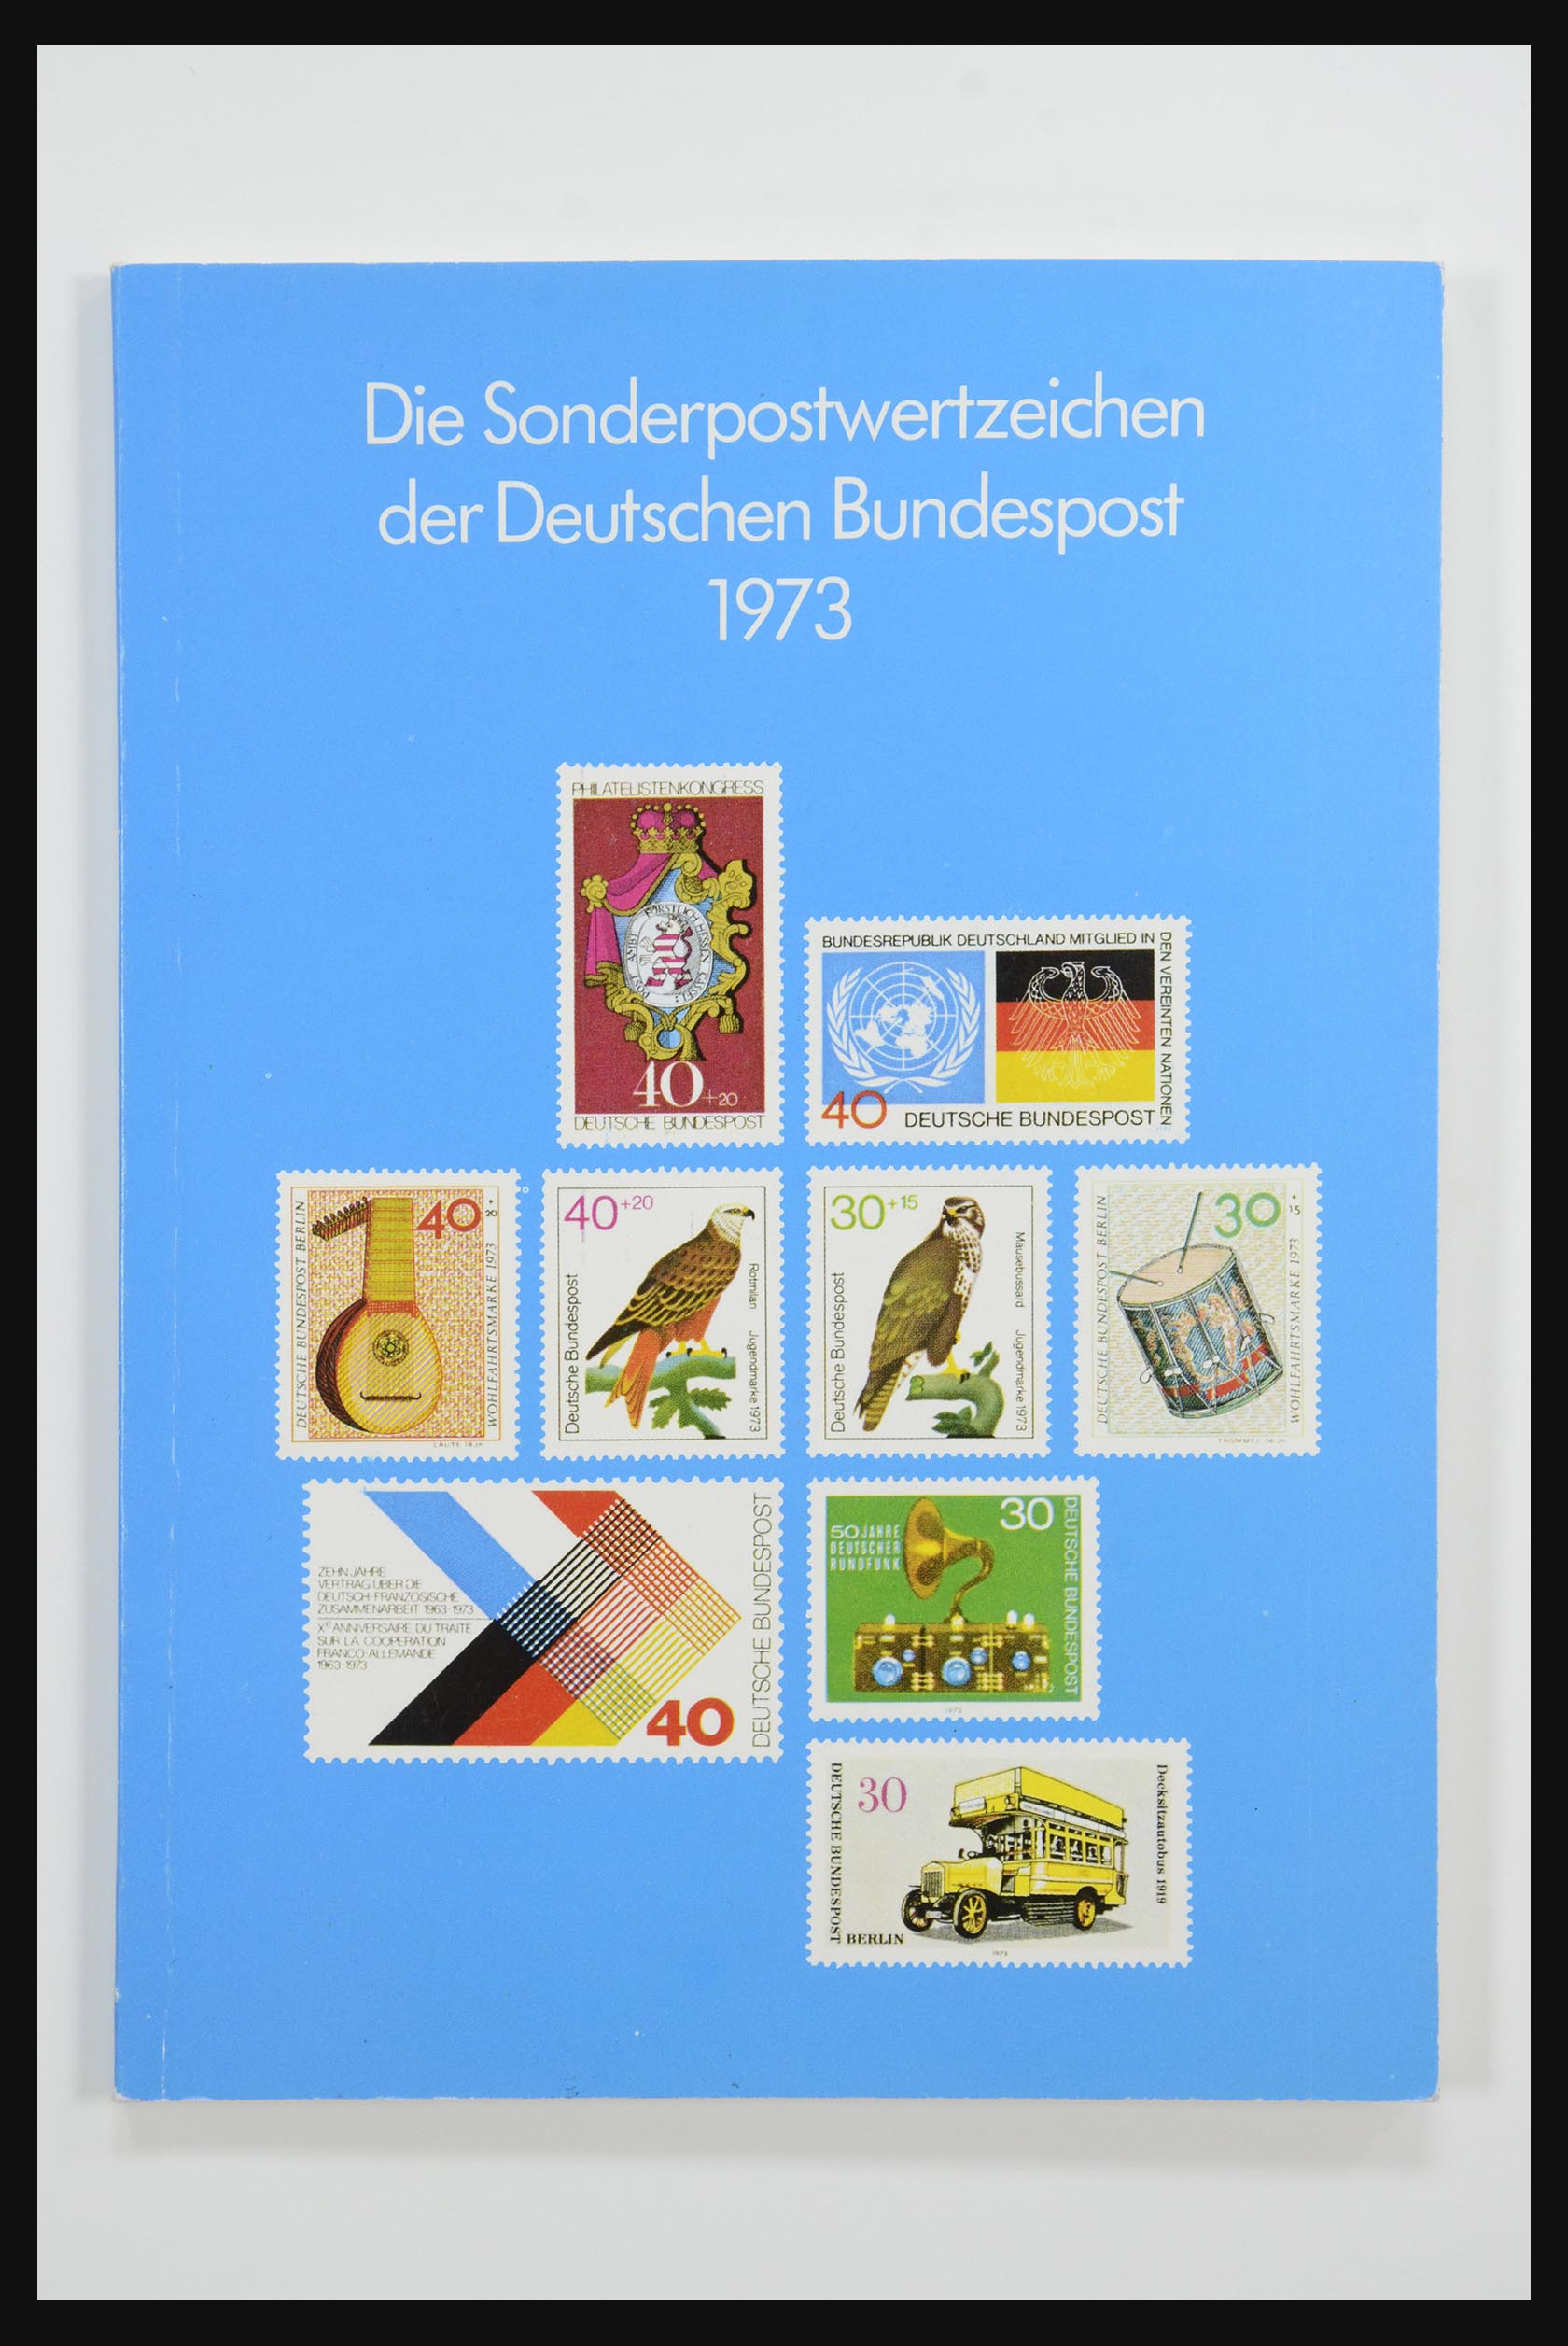 31836 001 - 31836 Bundespost yearbooks 1974-1999.